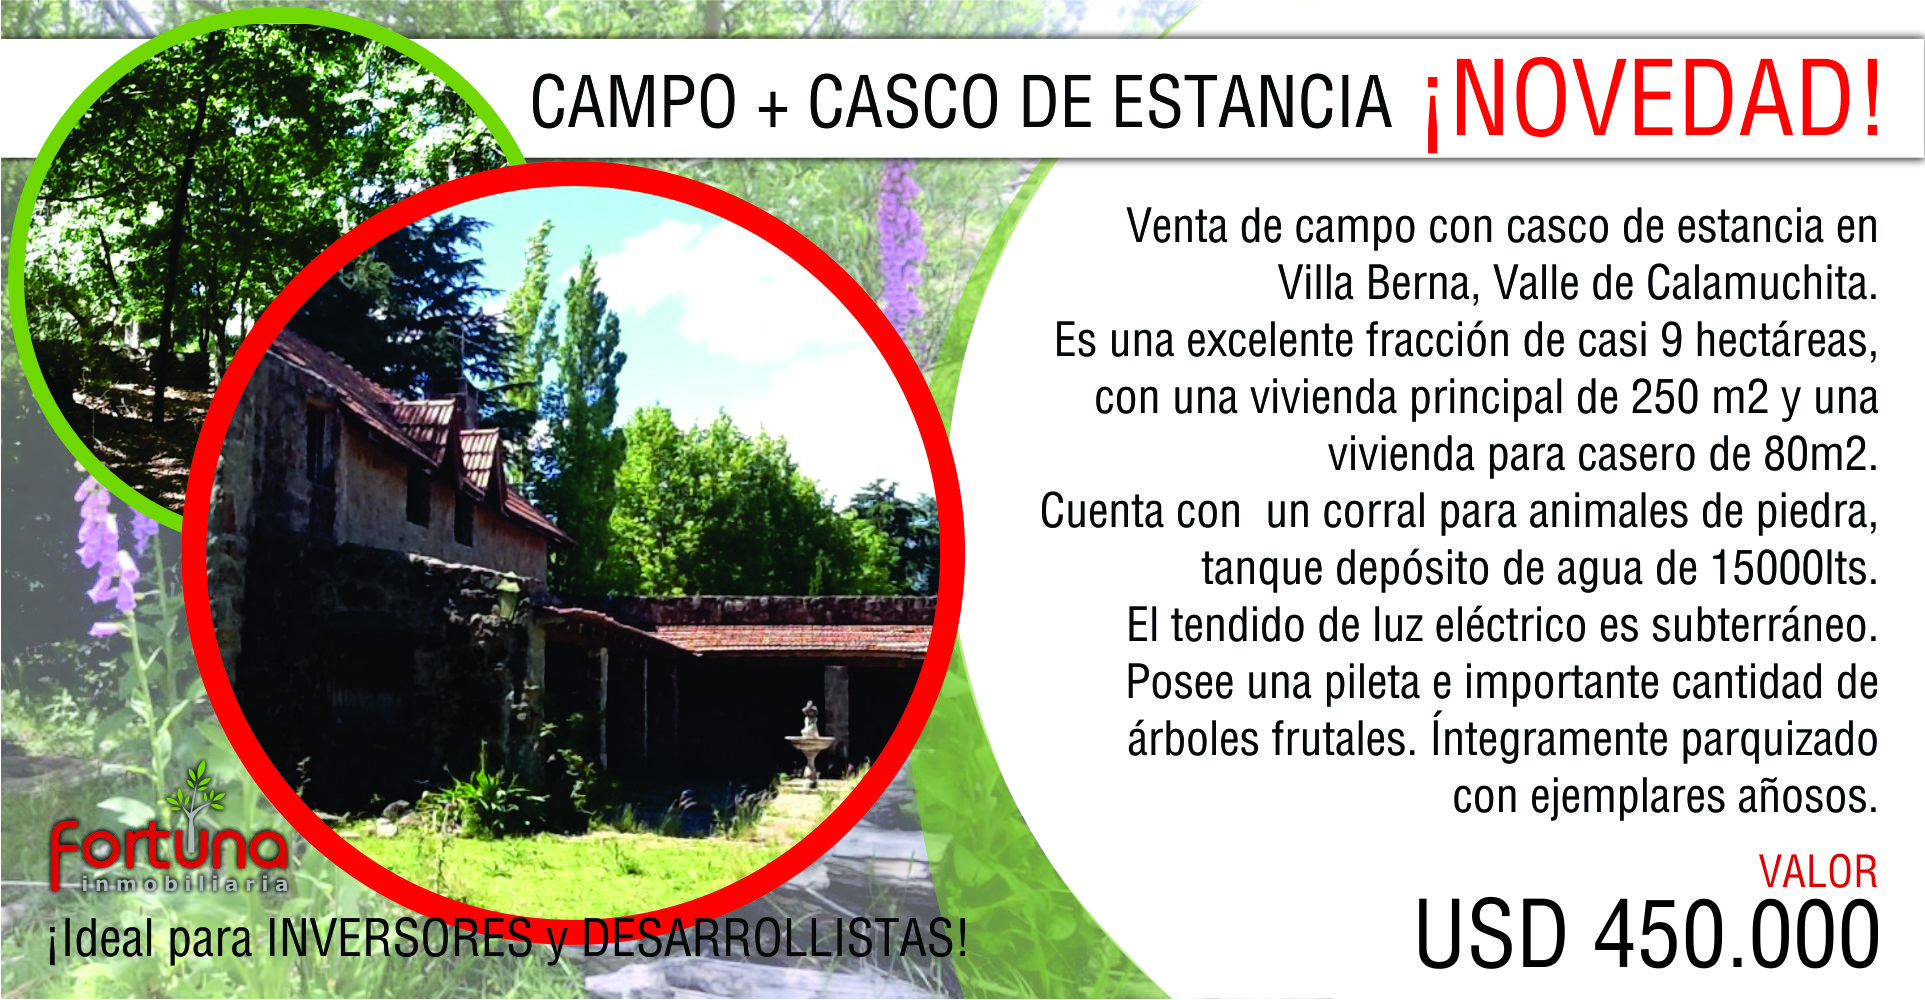 PIN10-CampoEnVenta-CascoDeEstancia-VillaBerna-FortunaInmobiliaria-HoldingFortuna